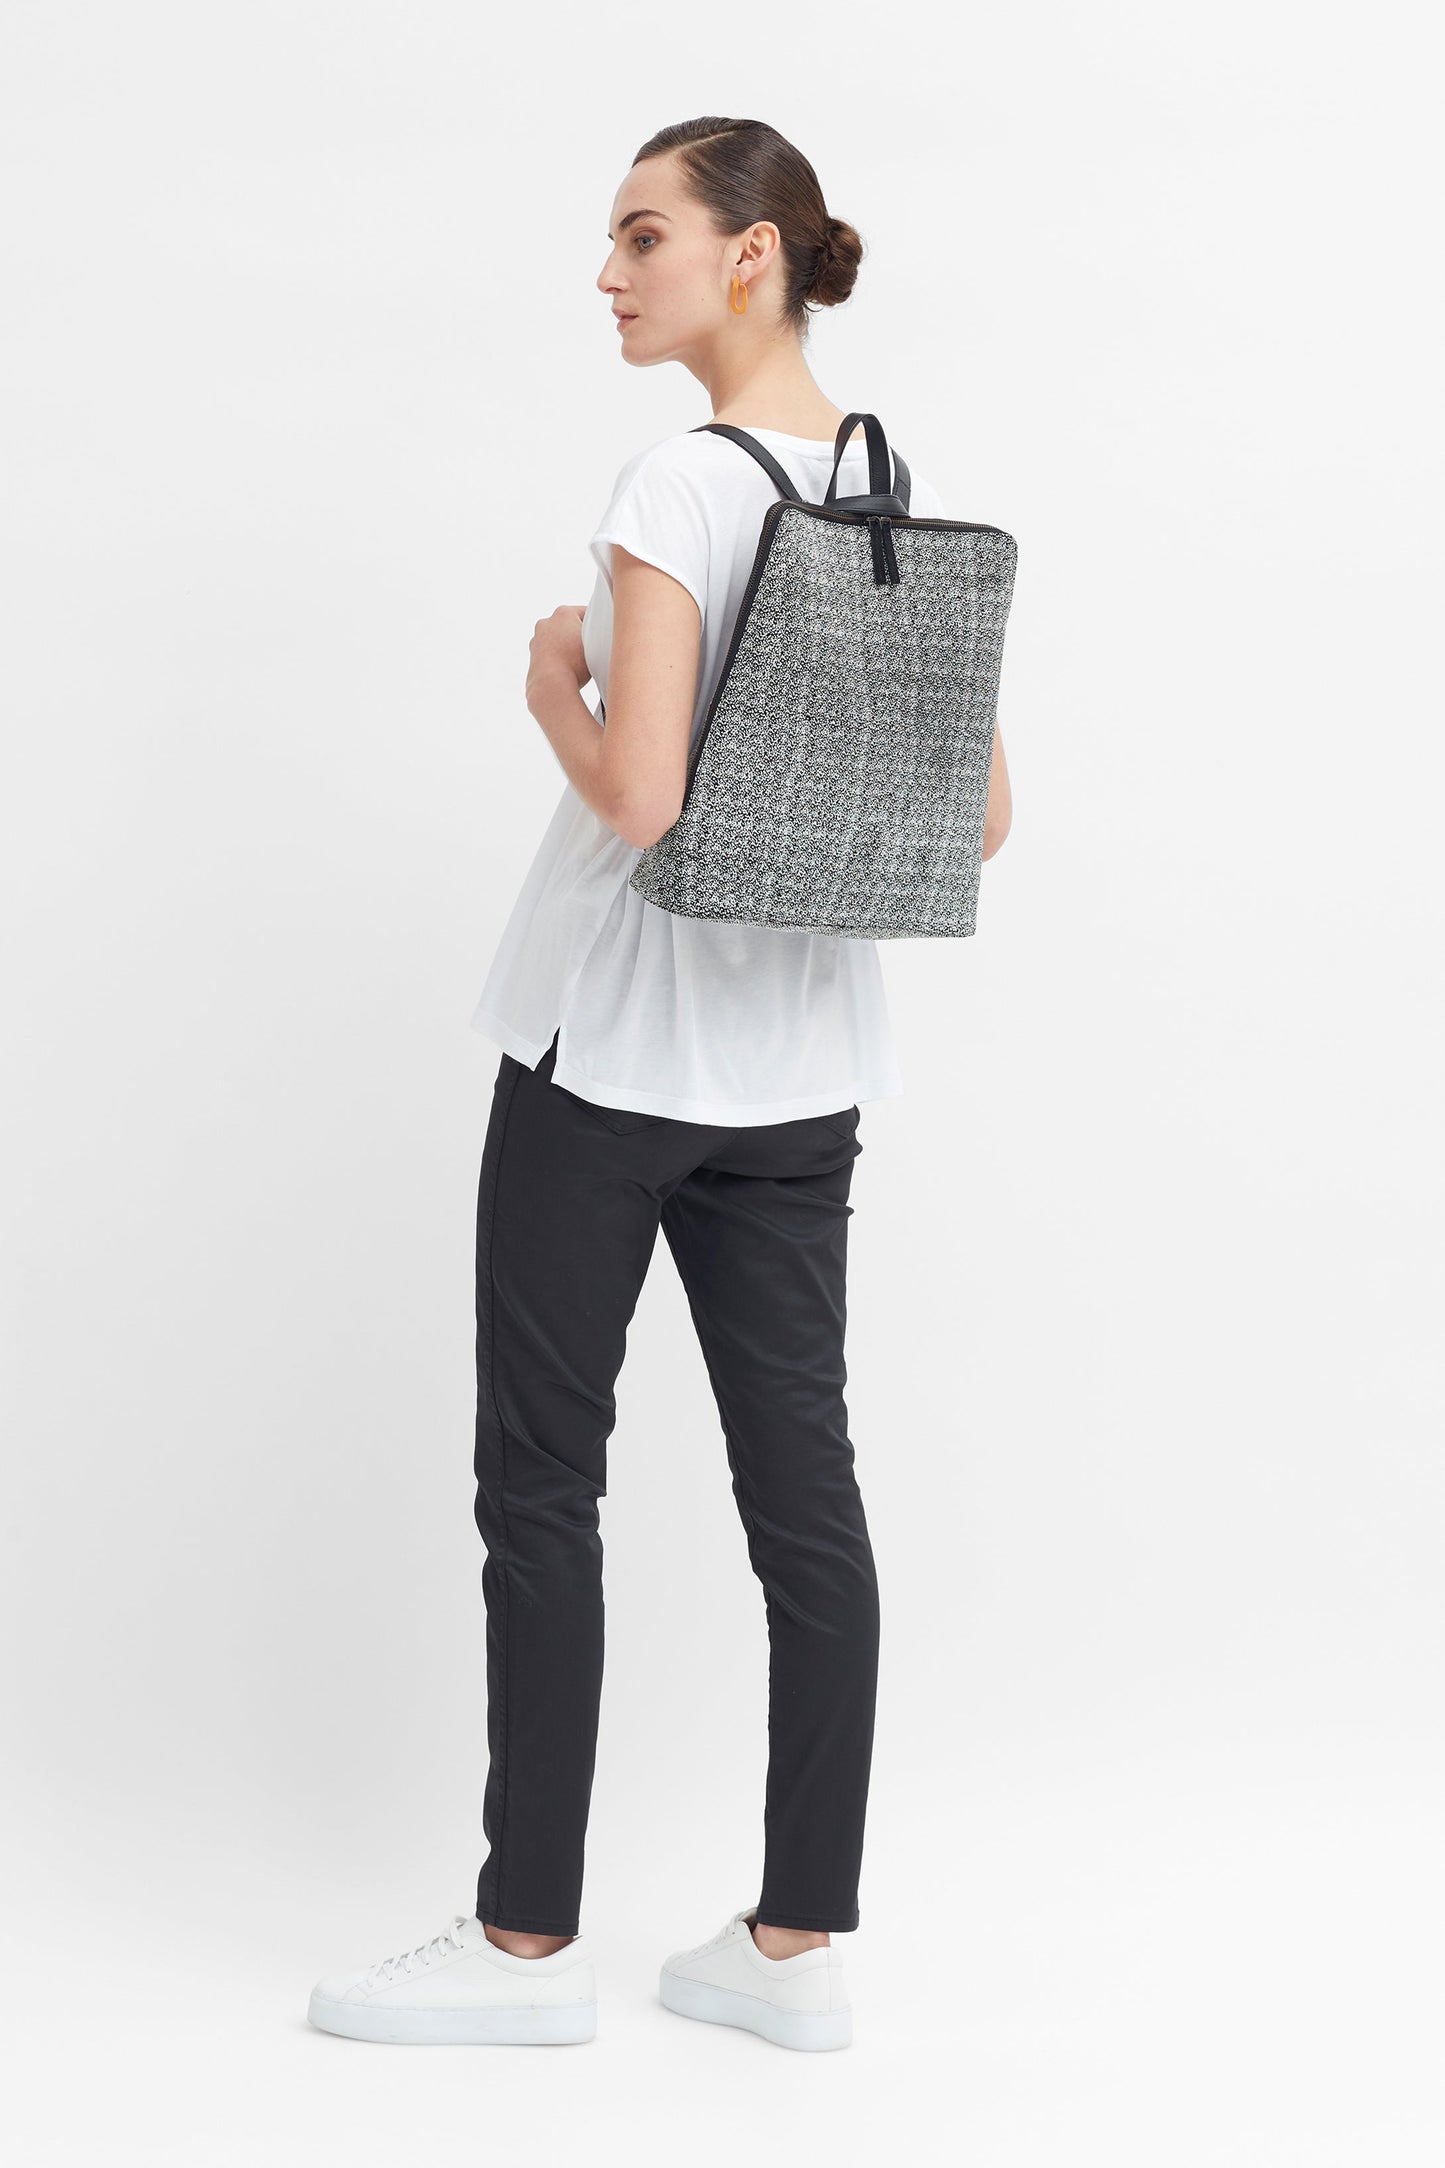 Torba Leather Backpack With Adjustable Strap Model BLACK WHITE